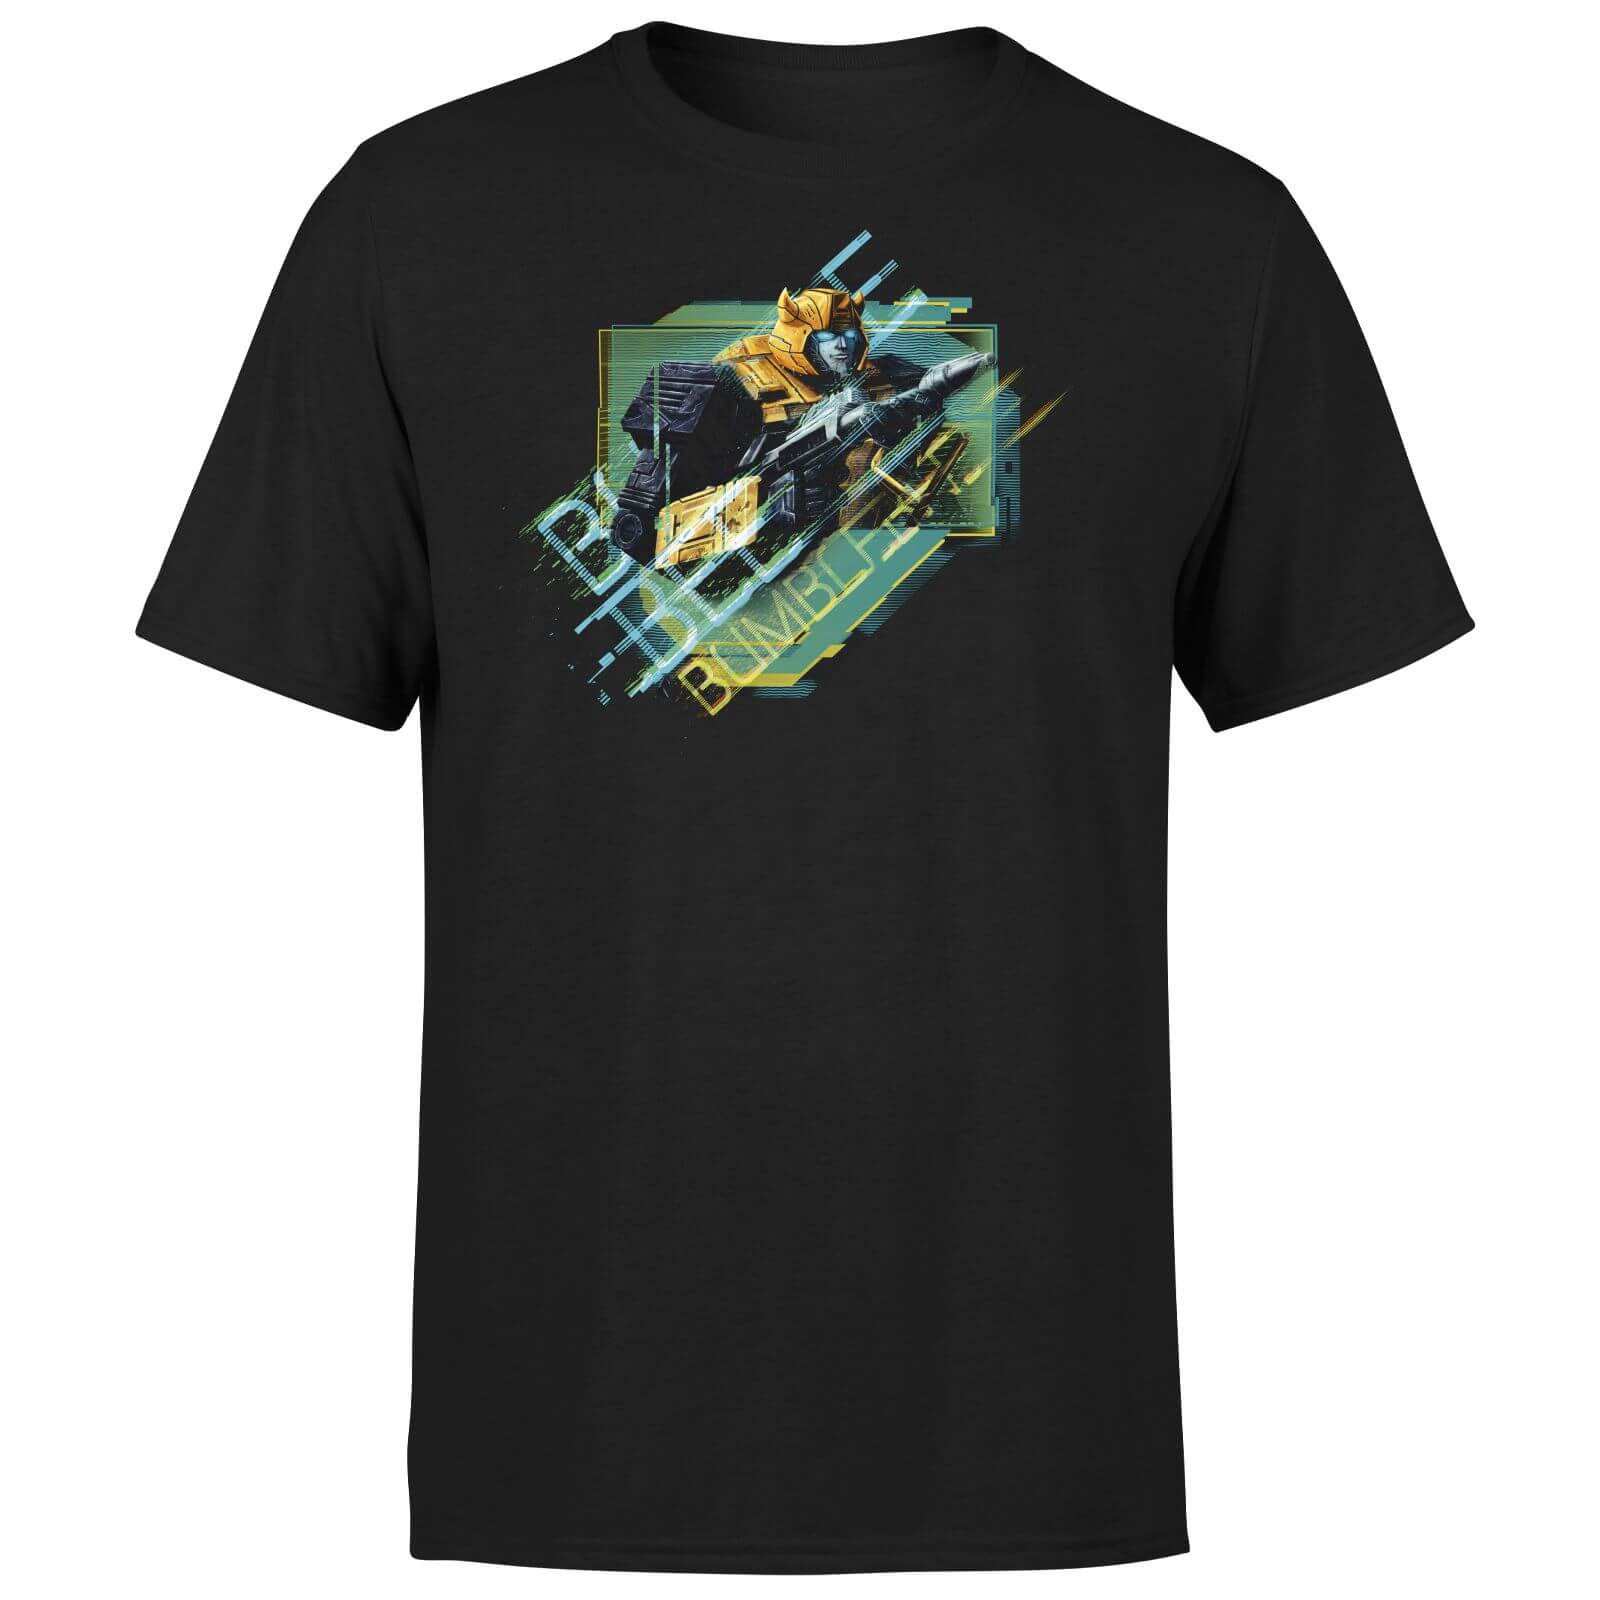 Transformers Bumble Bee Glitch Unisex T-Shirt - Black - S - Black